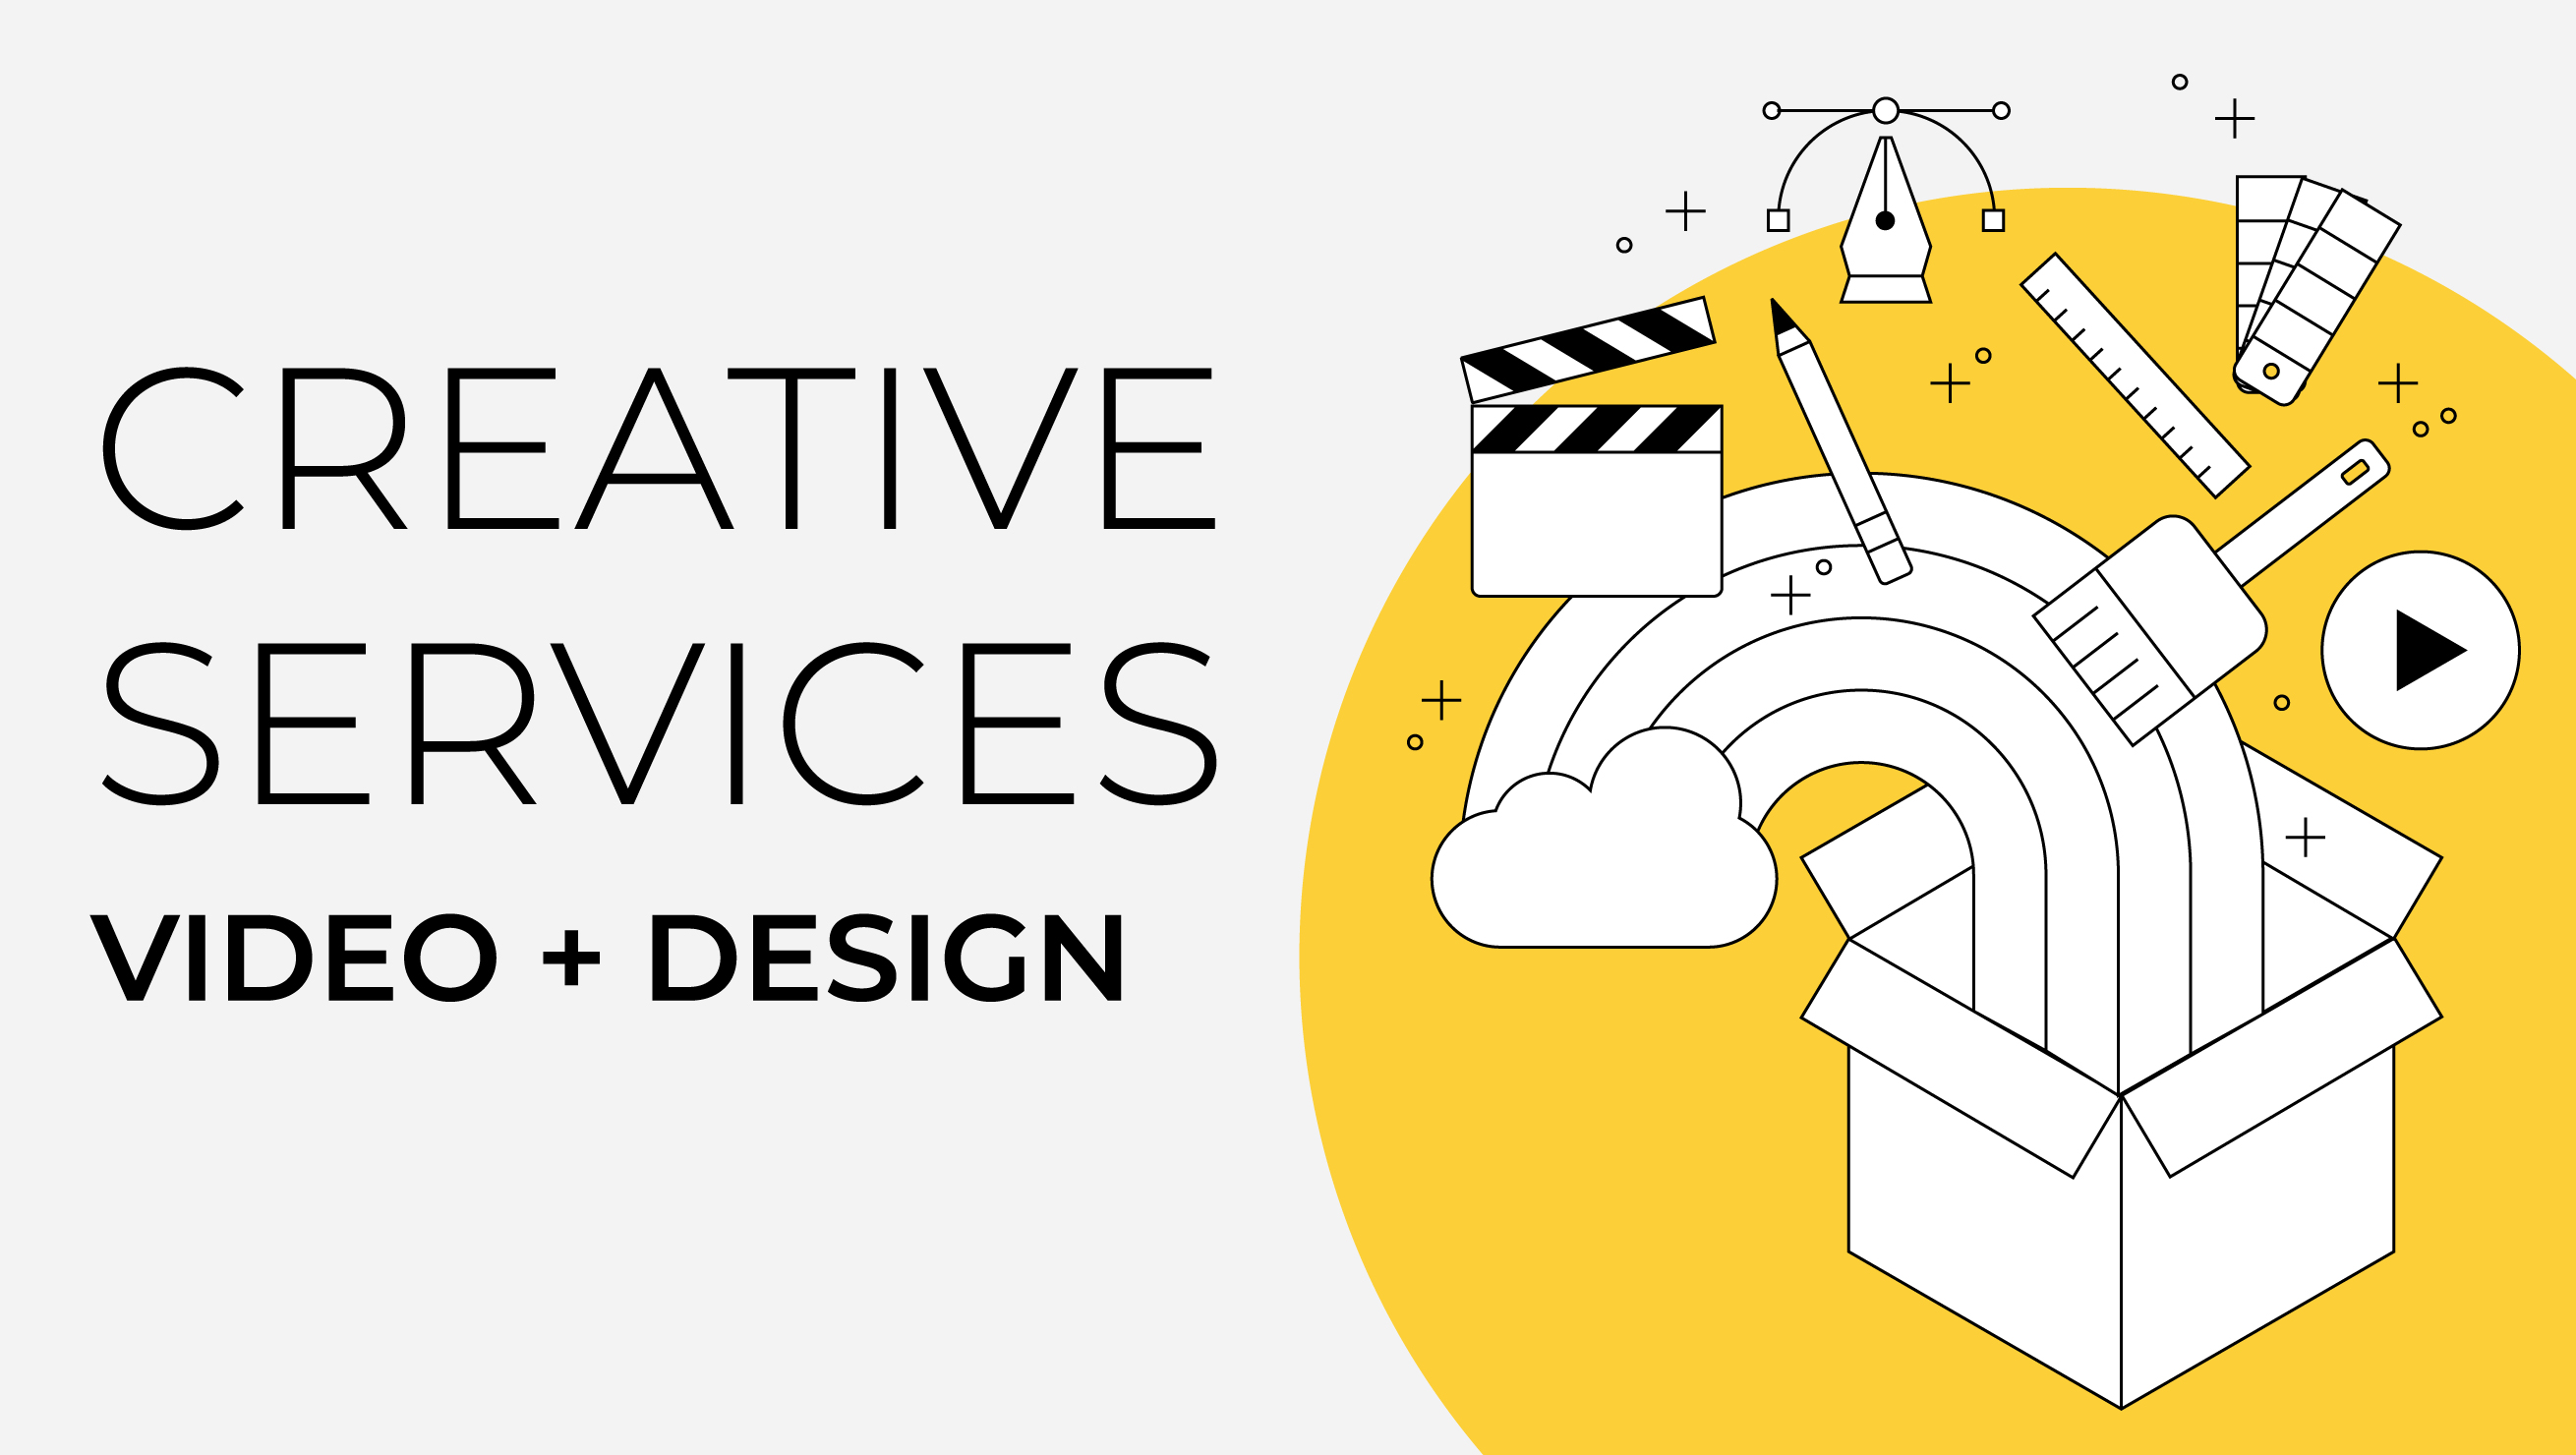 GTMA Creative Services Video + Design | Landing Page Header